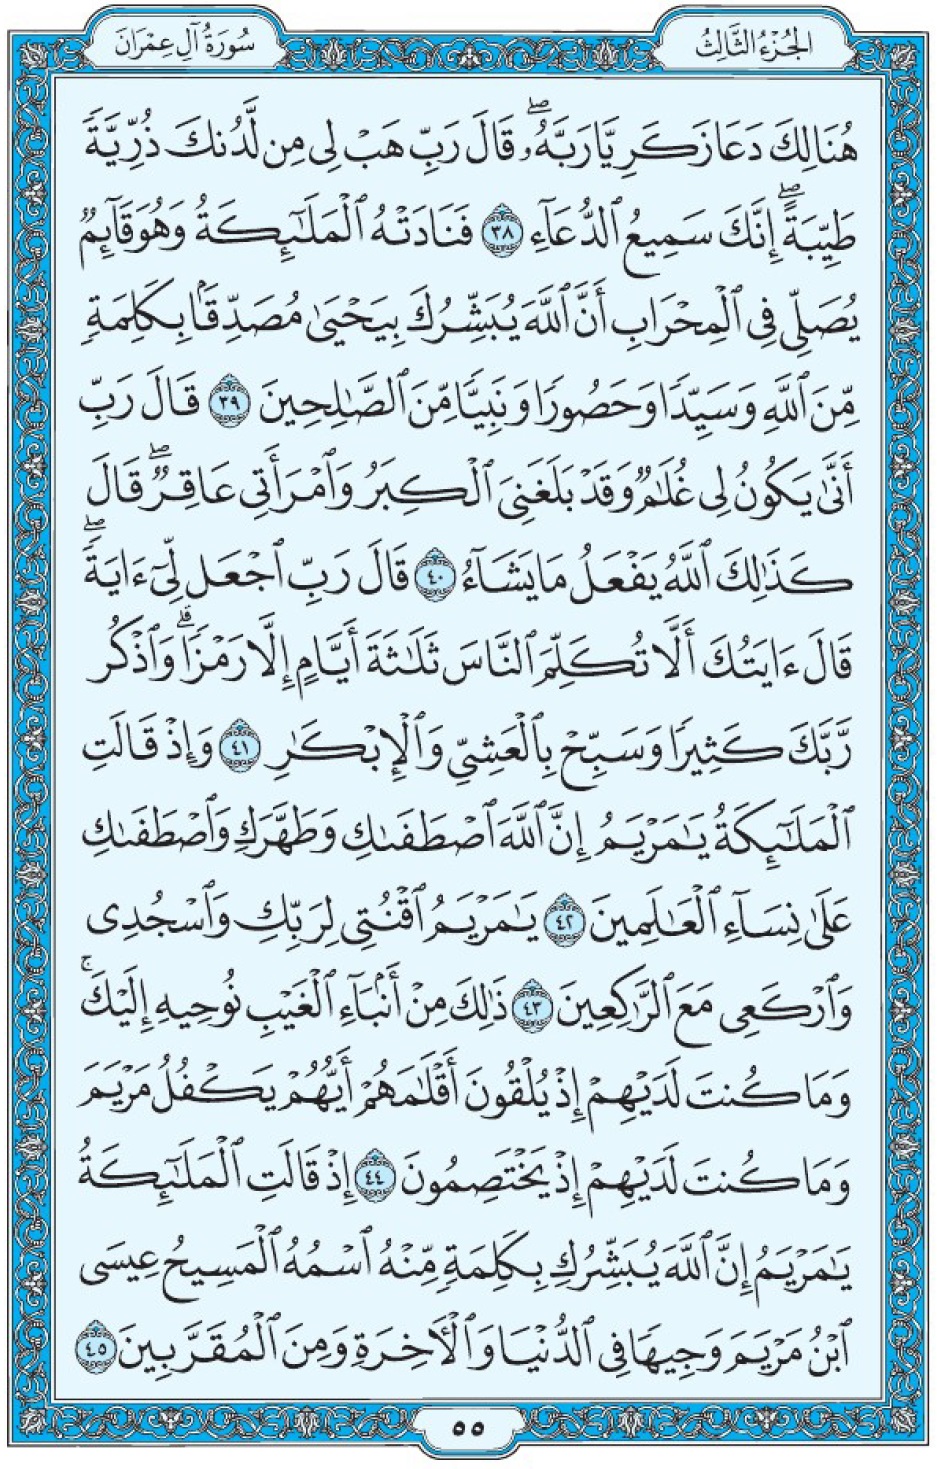 Коран Мединский мусхаф страница 55, Али Имран, аят 38-45